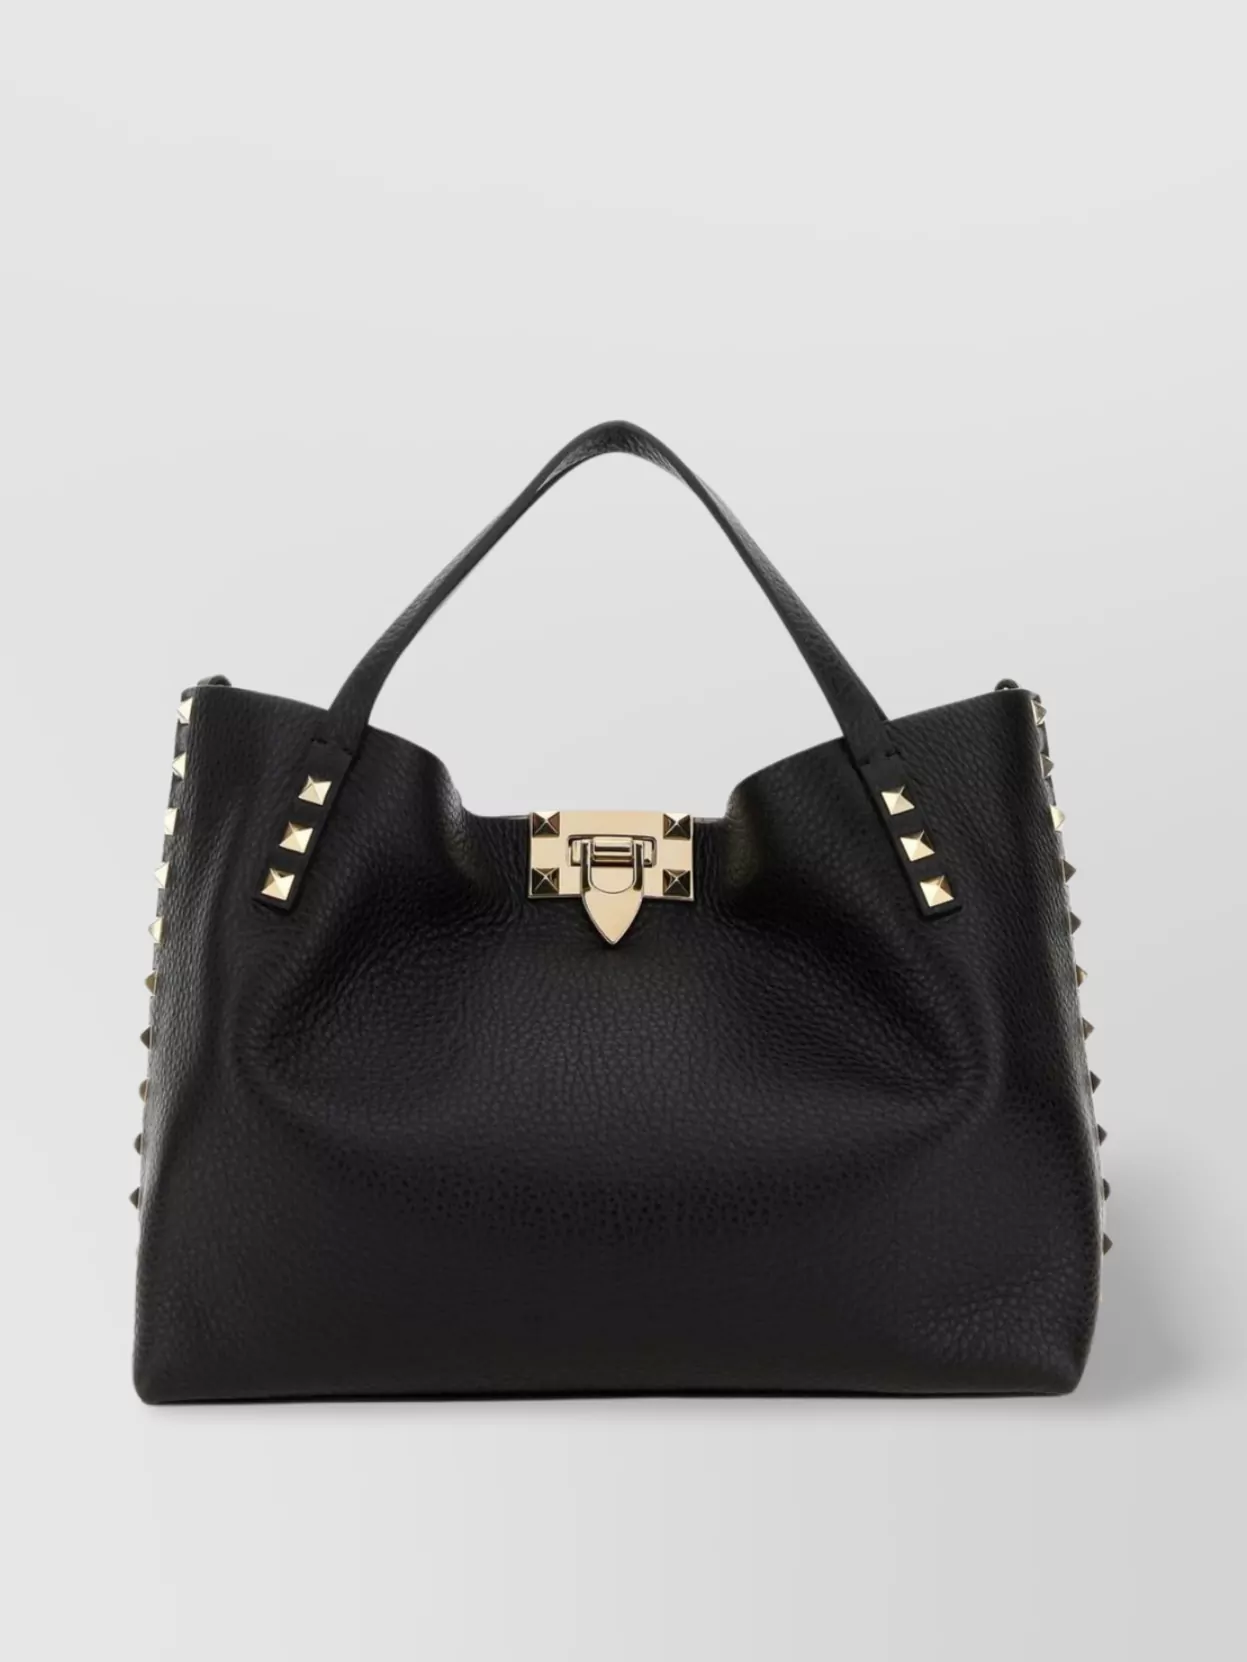 Valentino Garavani Embellished Leather Handbag With Top Handle In Black